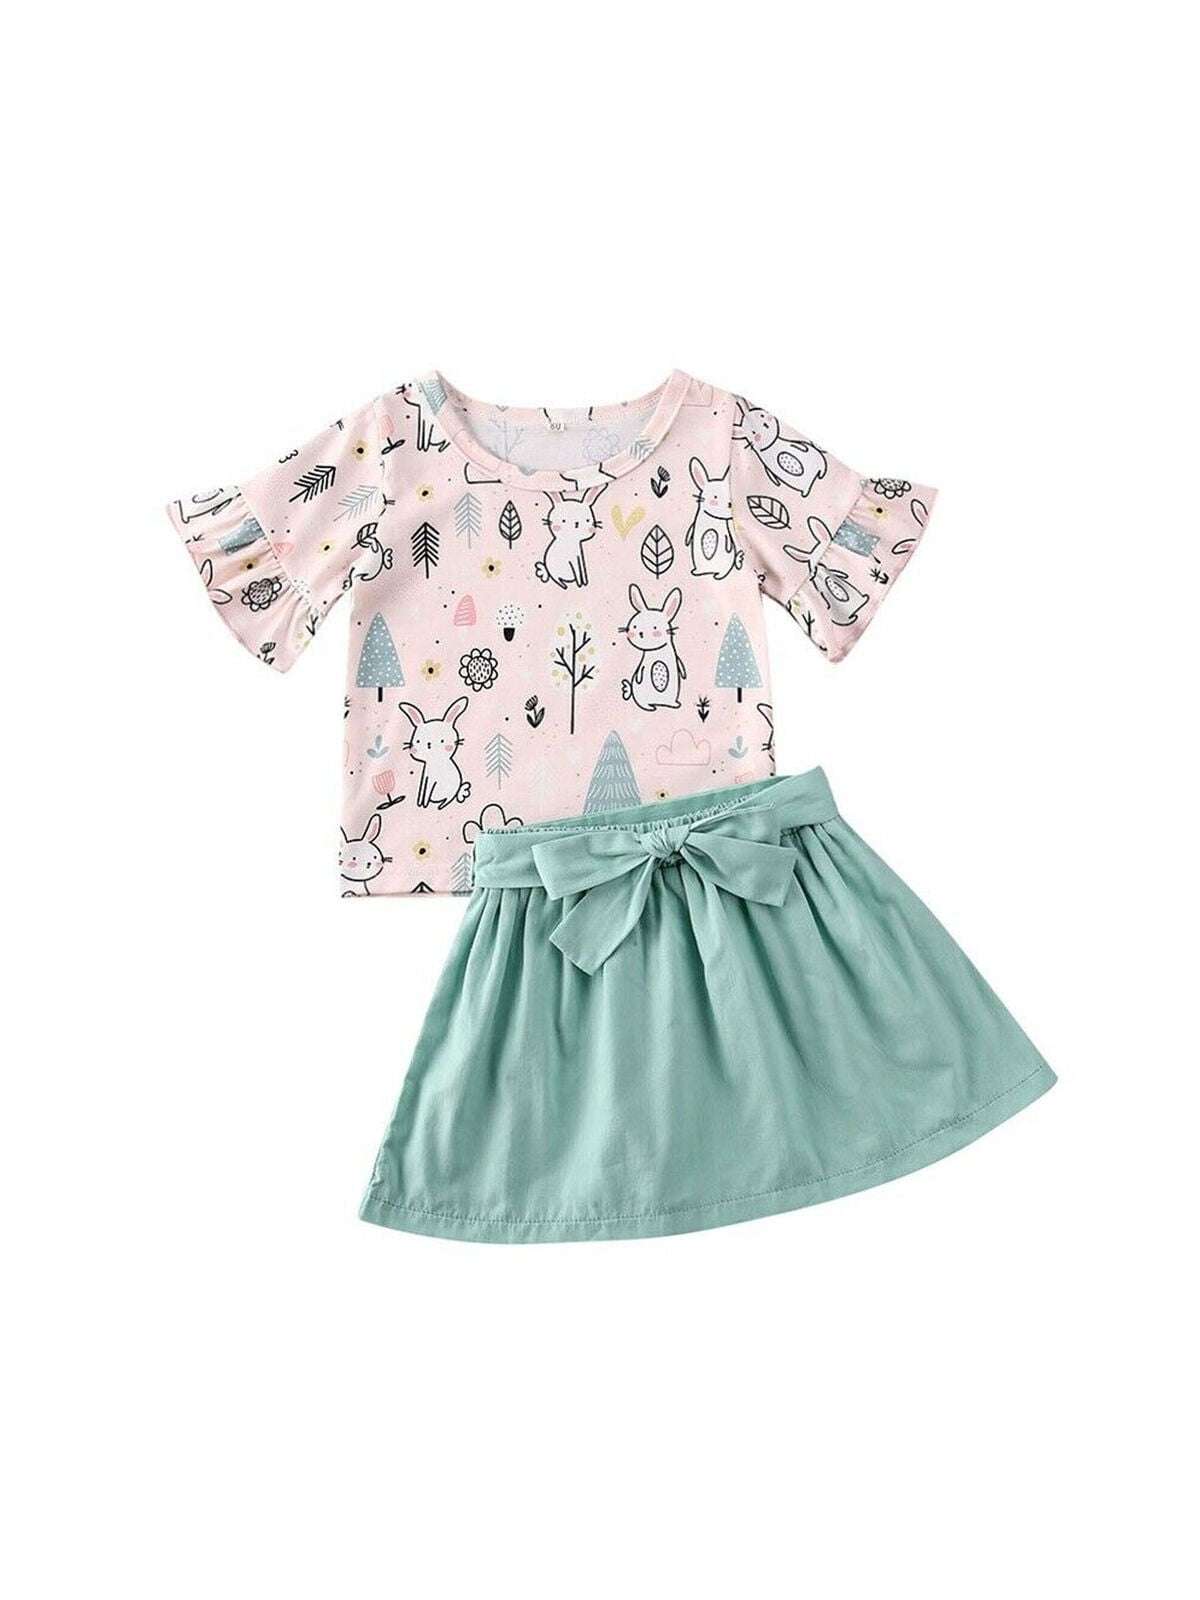 Toddler Kids Baby Girl Easter Bunny Rabbit Tops Bow Suspender Skirt Outfits Set 